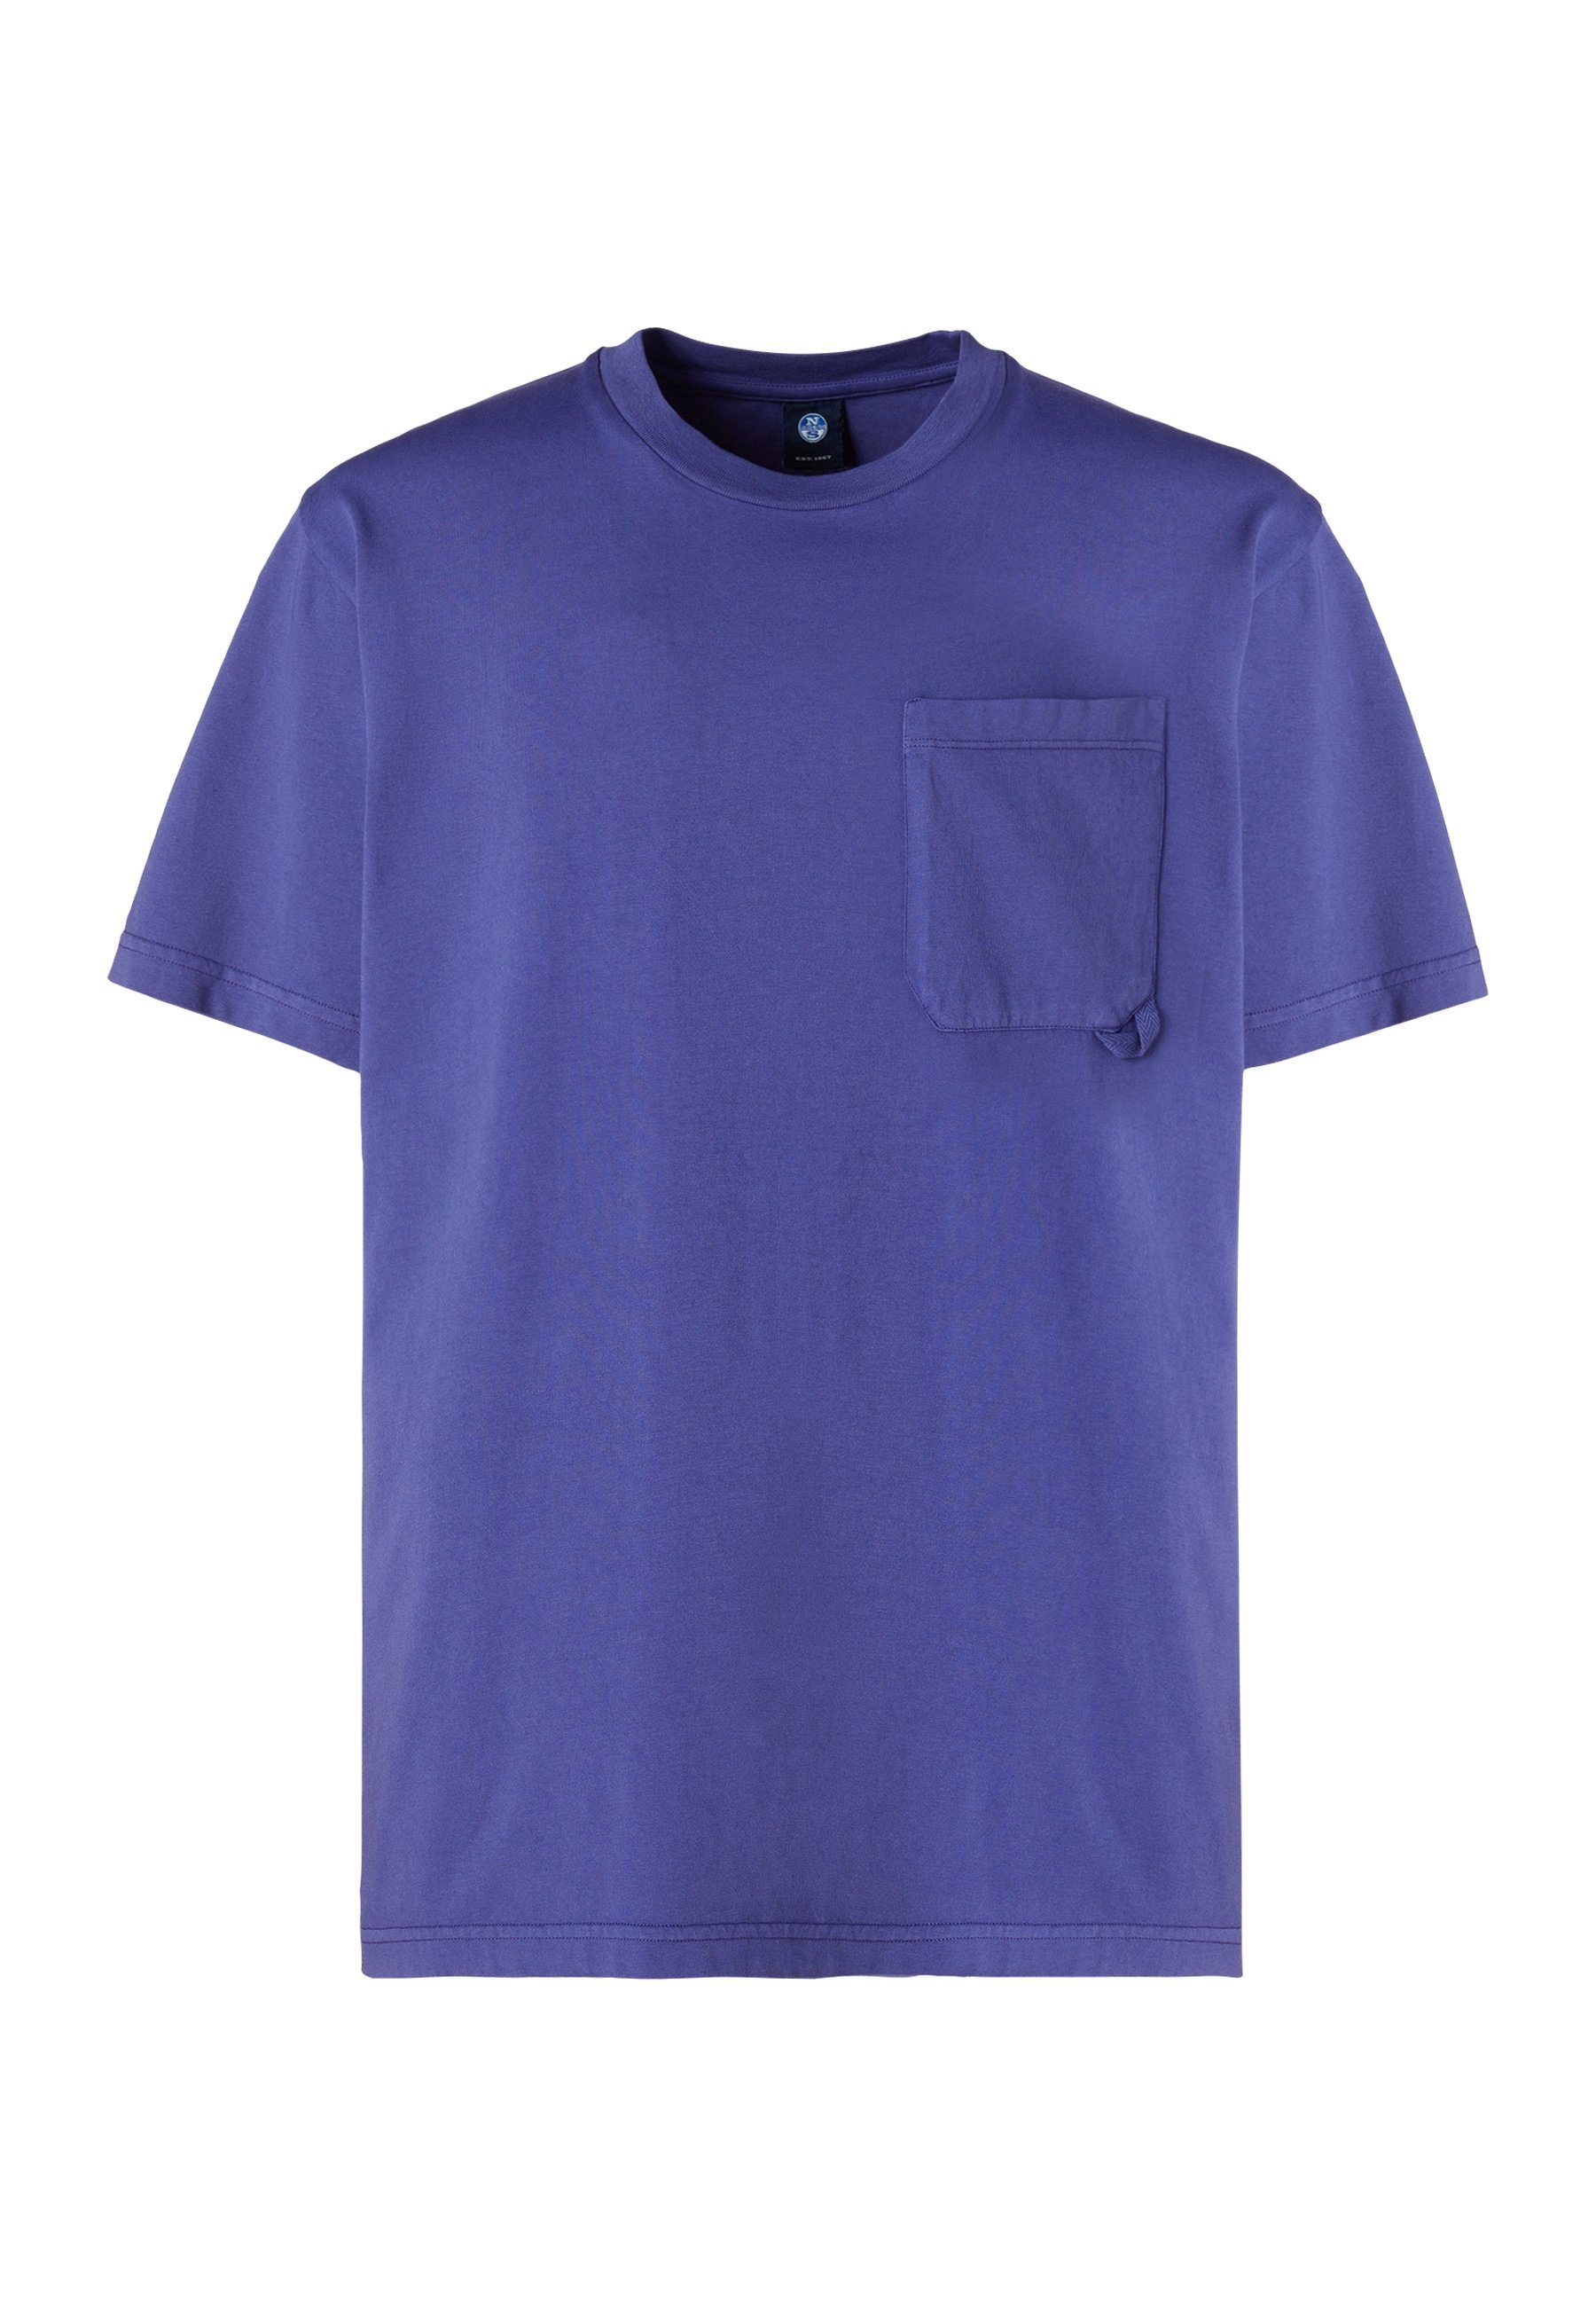 WAVE Sails T-Shirt kurzen T-Shirt C2 BLUE mit North Ärmeln